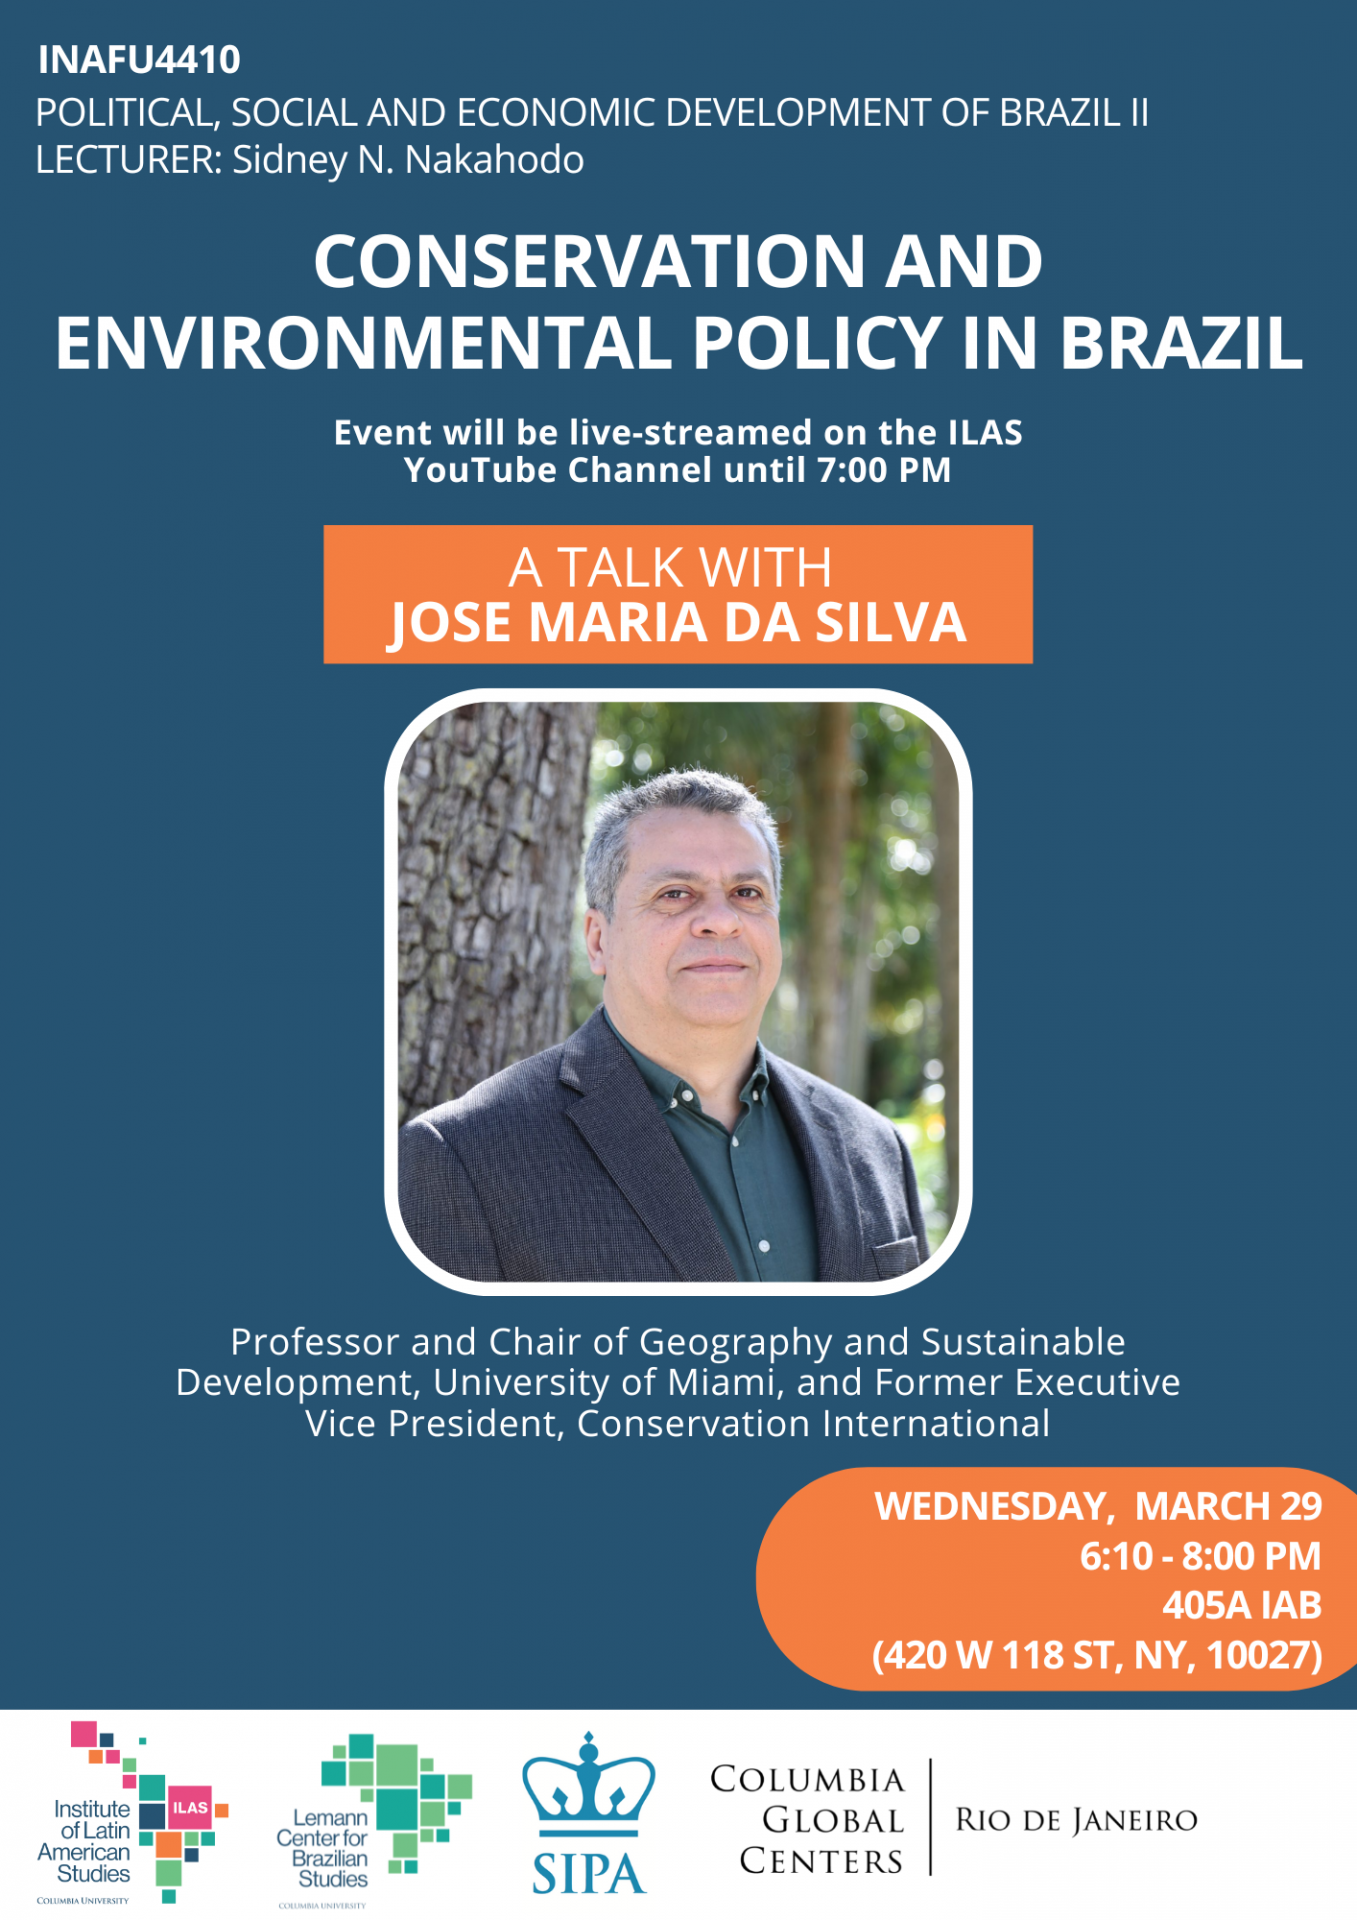 Event poster with image of Jose Maria da Silva